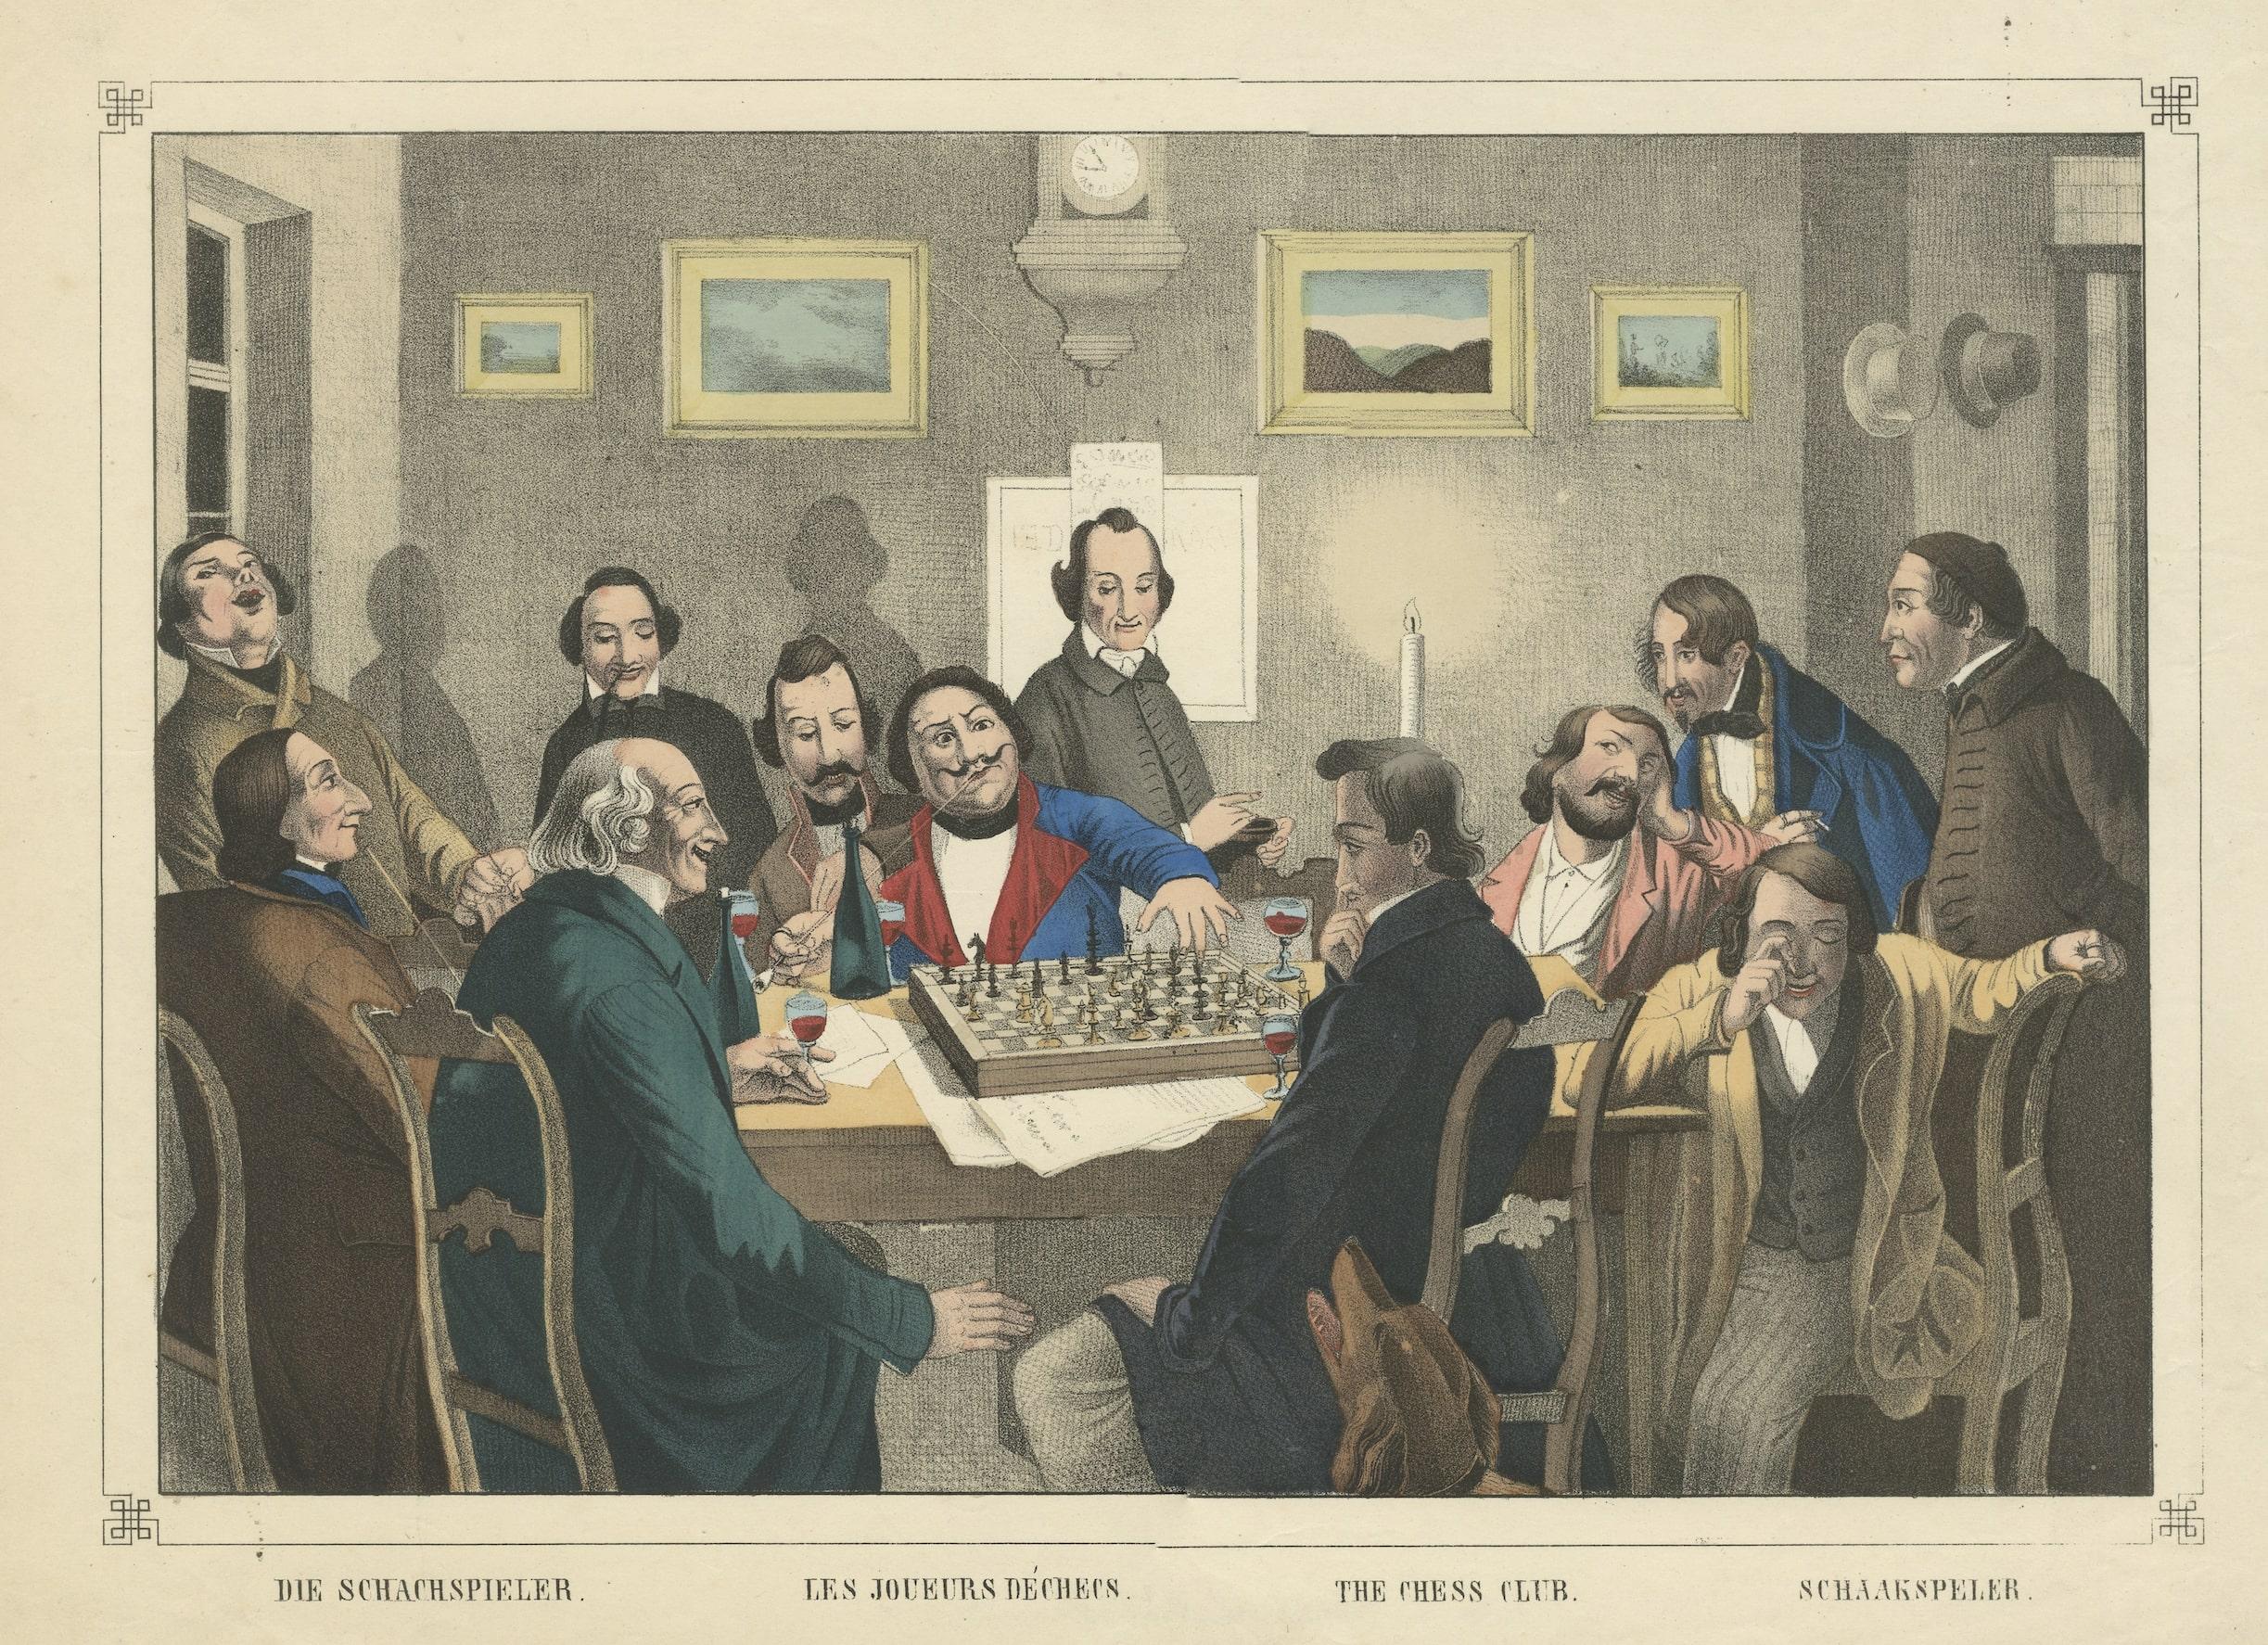 Antique print titled 'Die Schachspieler - Les Joueurs Déchecs - The Chess Club - Schaakspeler'. Original antique print of a chess game. Lithograph after Johann Peter Hasenclever, published circa 1860.